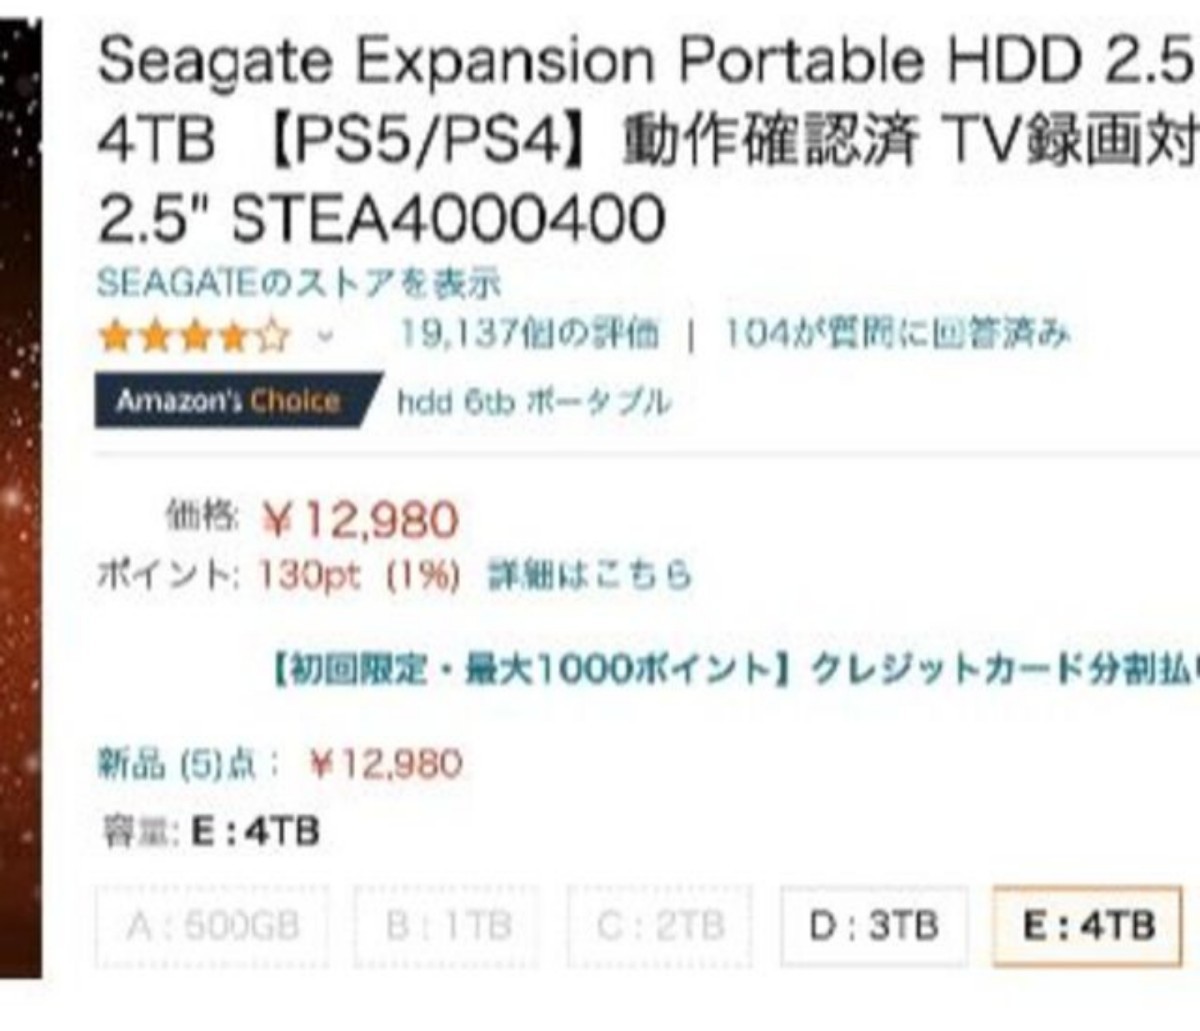 Seagate Expansion Portable HDD 2.5 4TB ポータブルハードディスク USB3.0 外付け